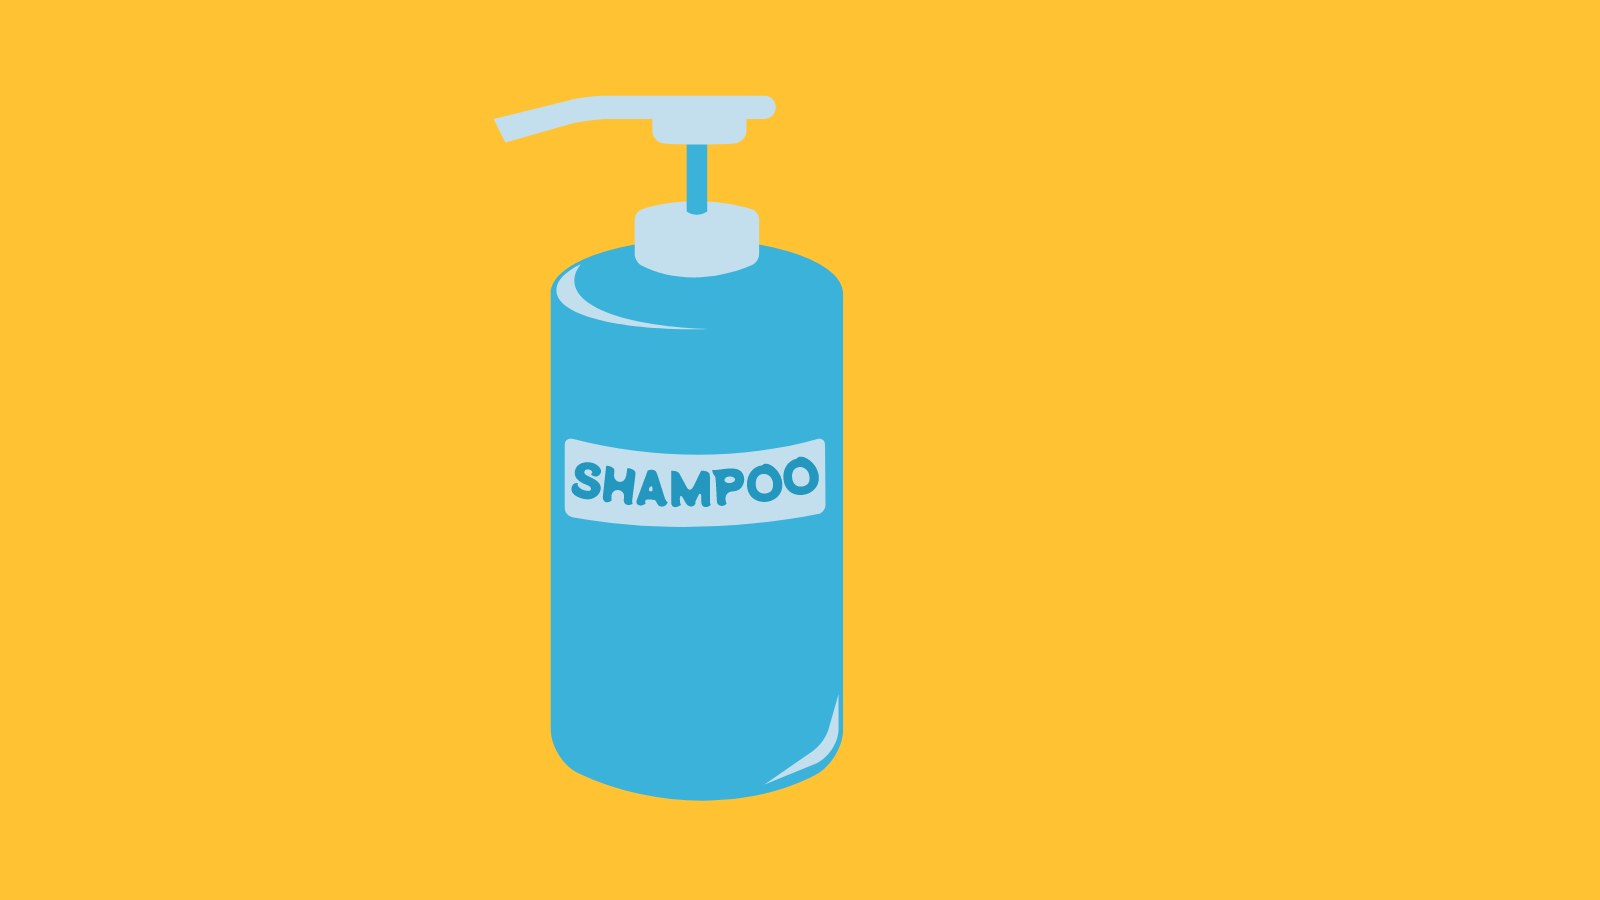 A bottle of shampoo